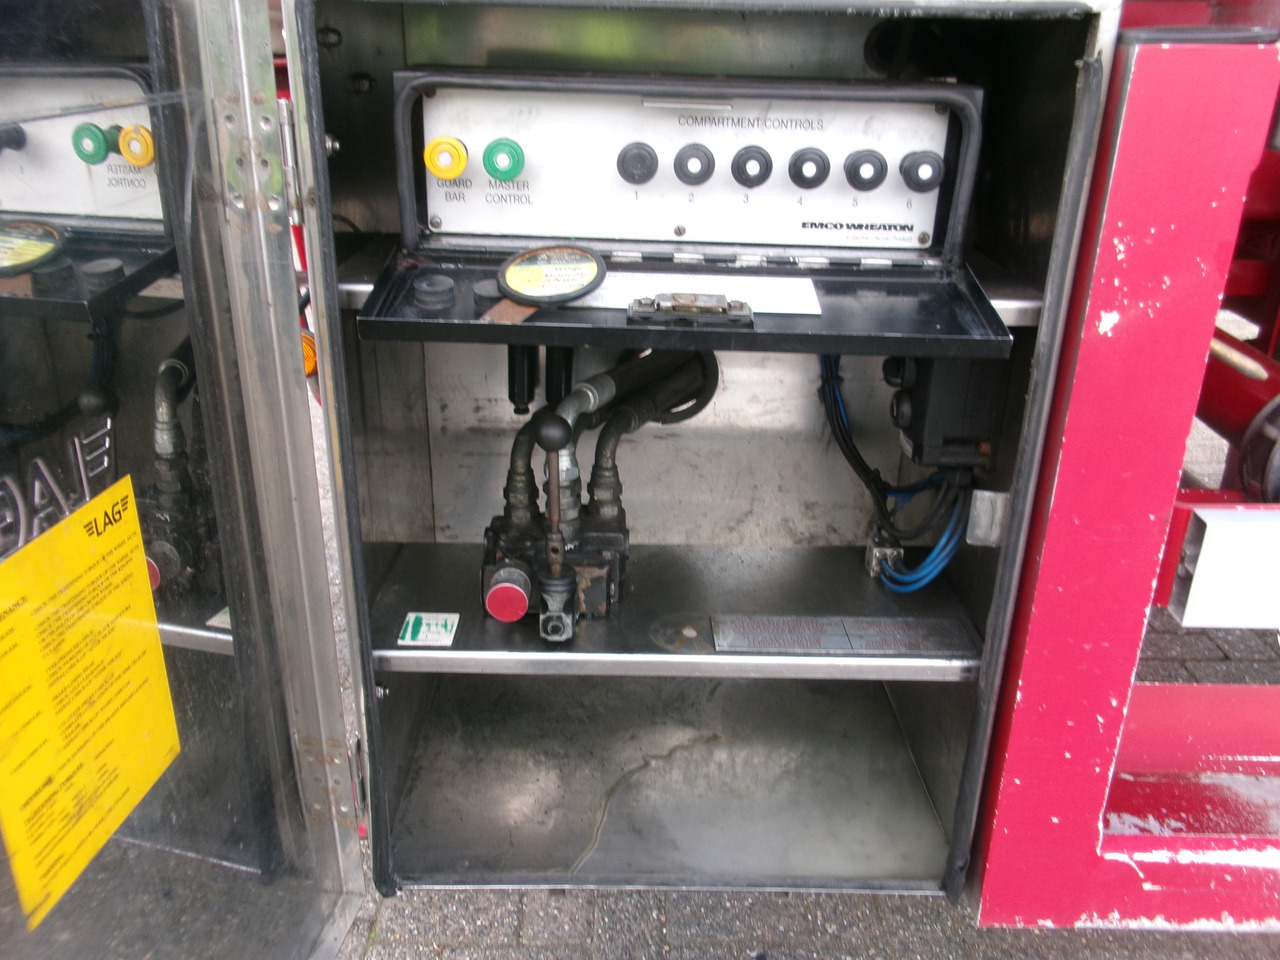 Säiliöpuoliperävaunu kuljetusta varten polttoaine L.A.G. Fuel tank alu 44.4 m3 / 6 comp + pump: kuva Säiliöpuoliperävaunu kuljetusta varten polttoaine L.A.G. Fuel tank alu 44.4 m3 / 6 comp + pump